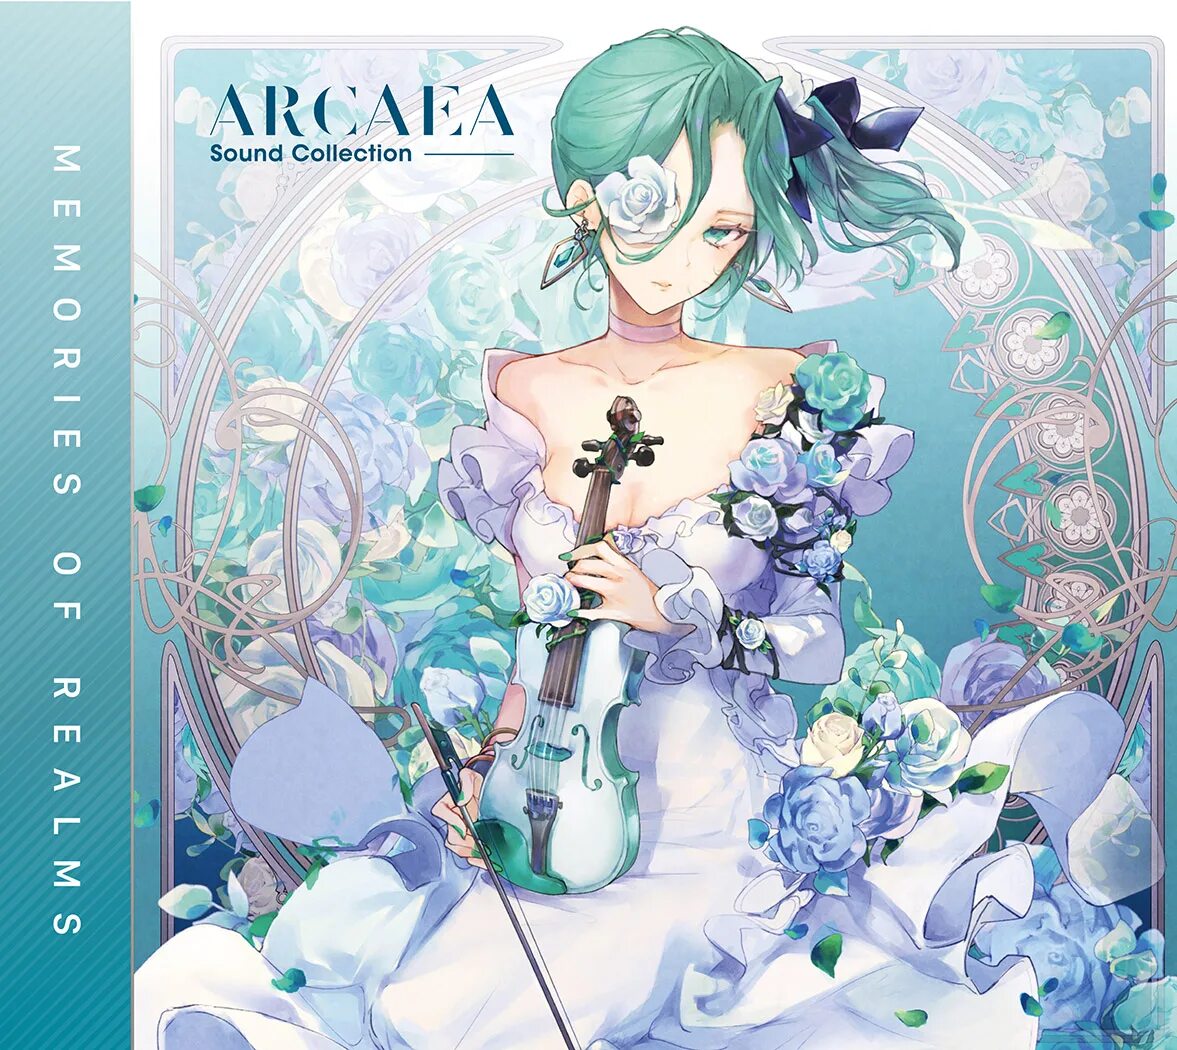 Sound collection. Sounds collection. Arcaea обложка. Arcaea Songs. Loveless Dress Arcaea.